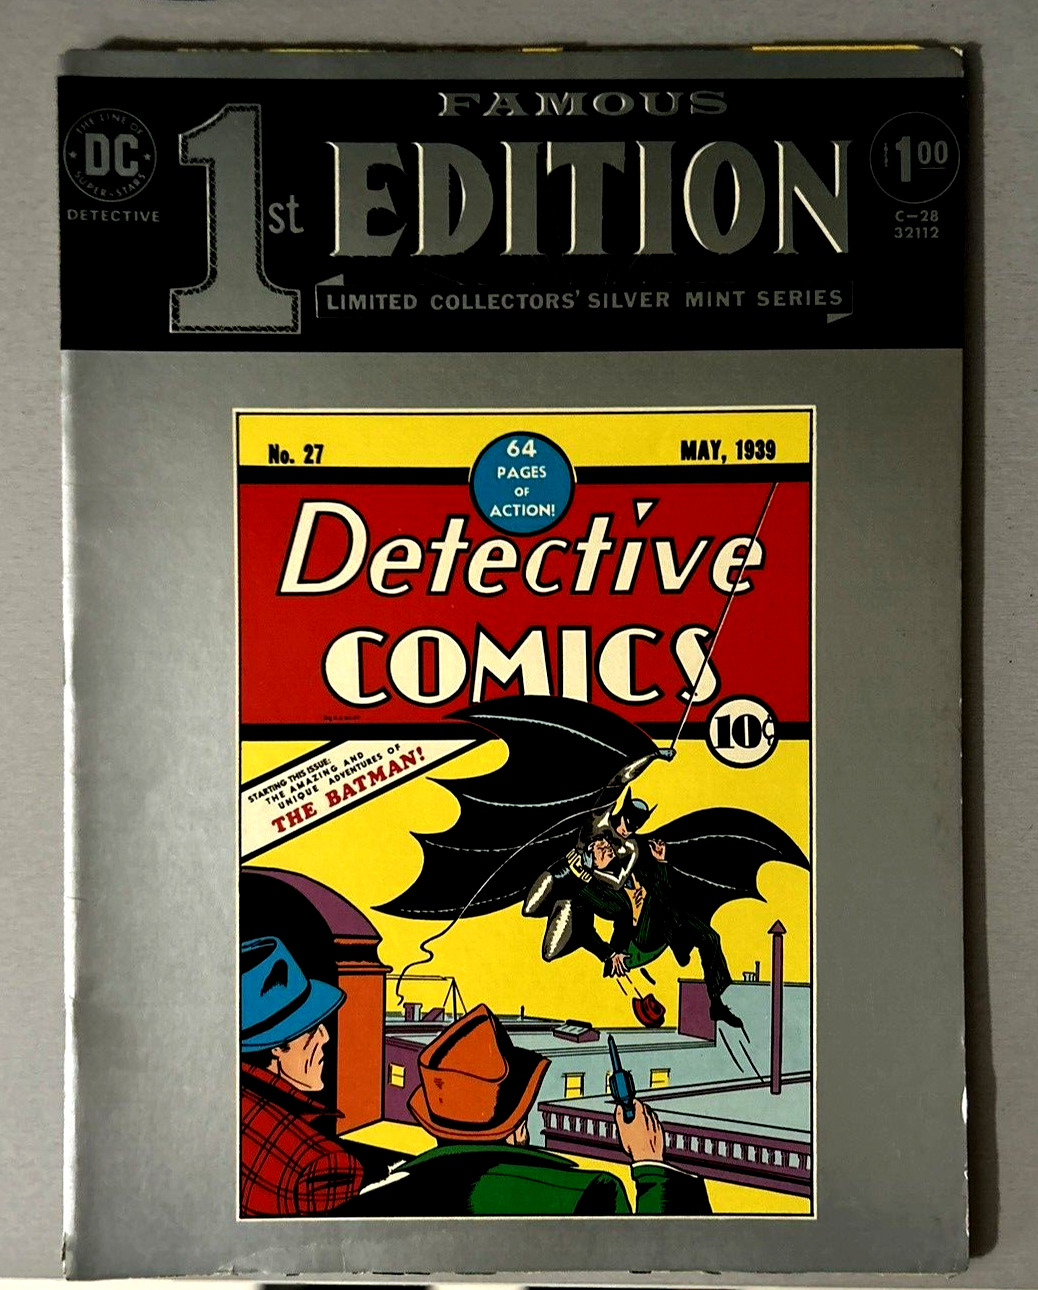 DC-Famous 1st Edition Detective Comics LTD/Collectors Silver Mint Series Batman